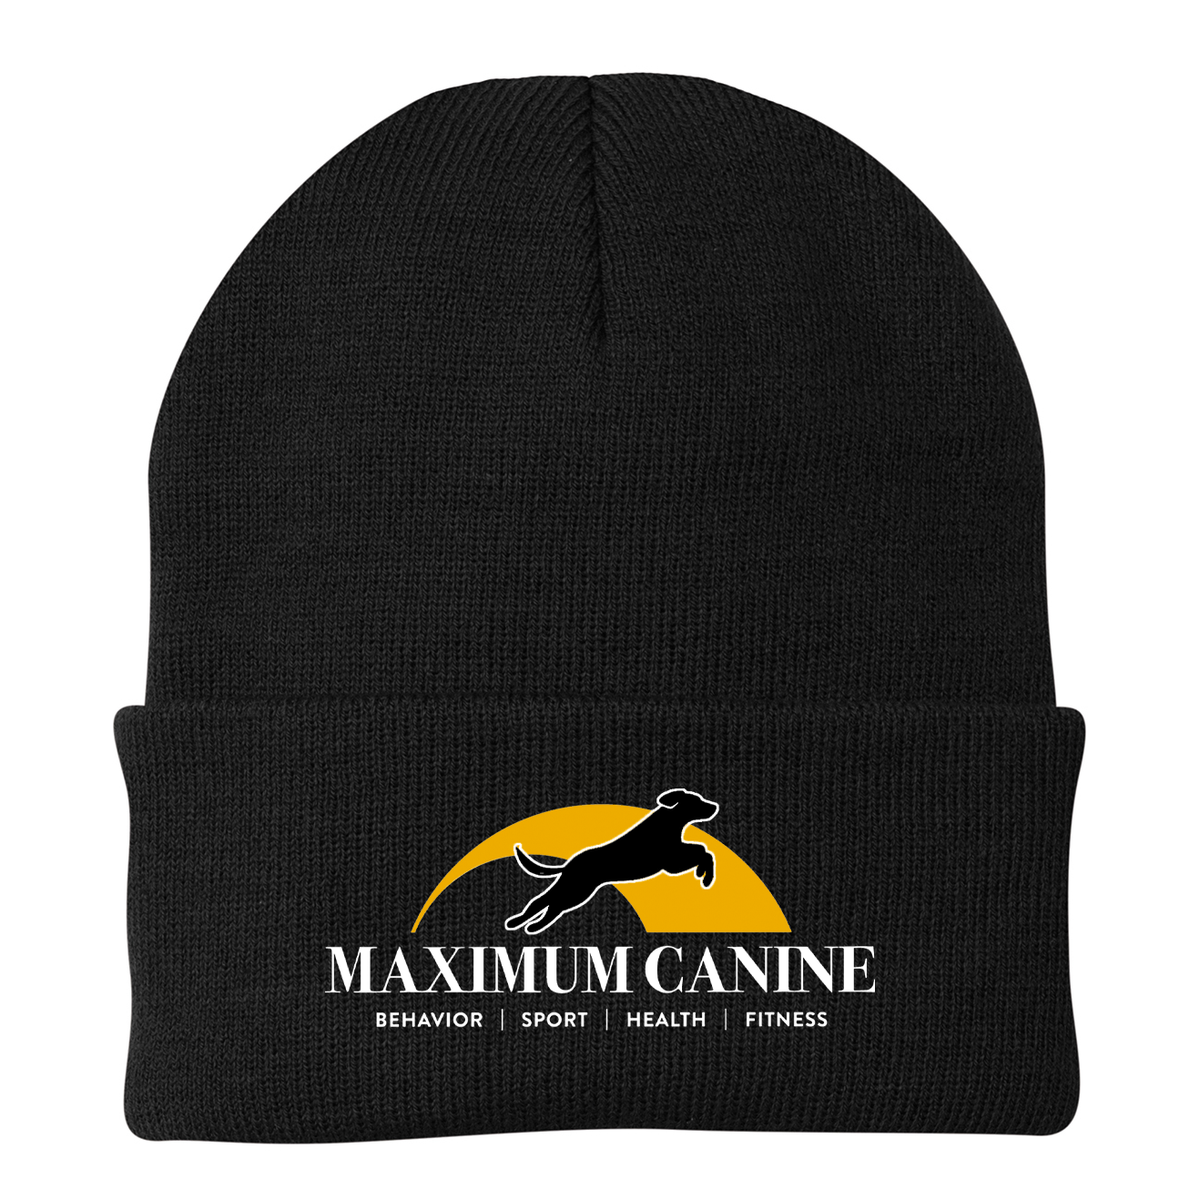 Maximum Canine Knit Beanie